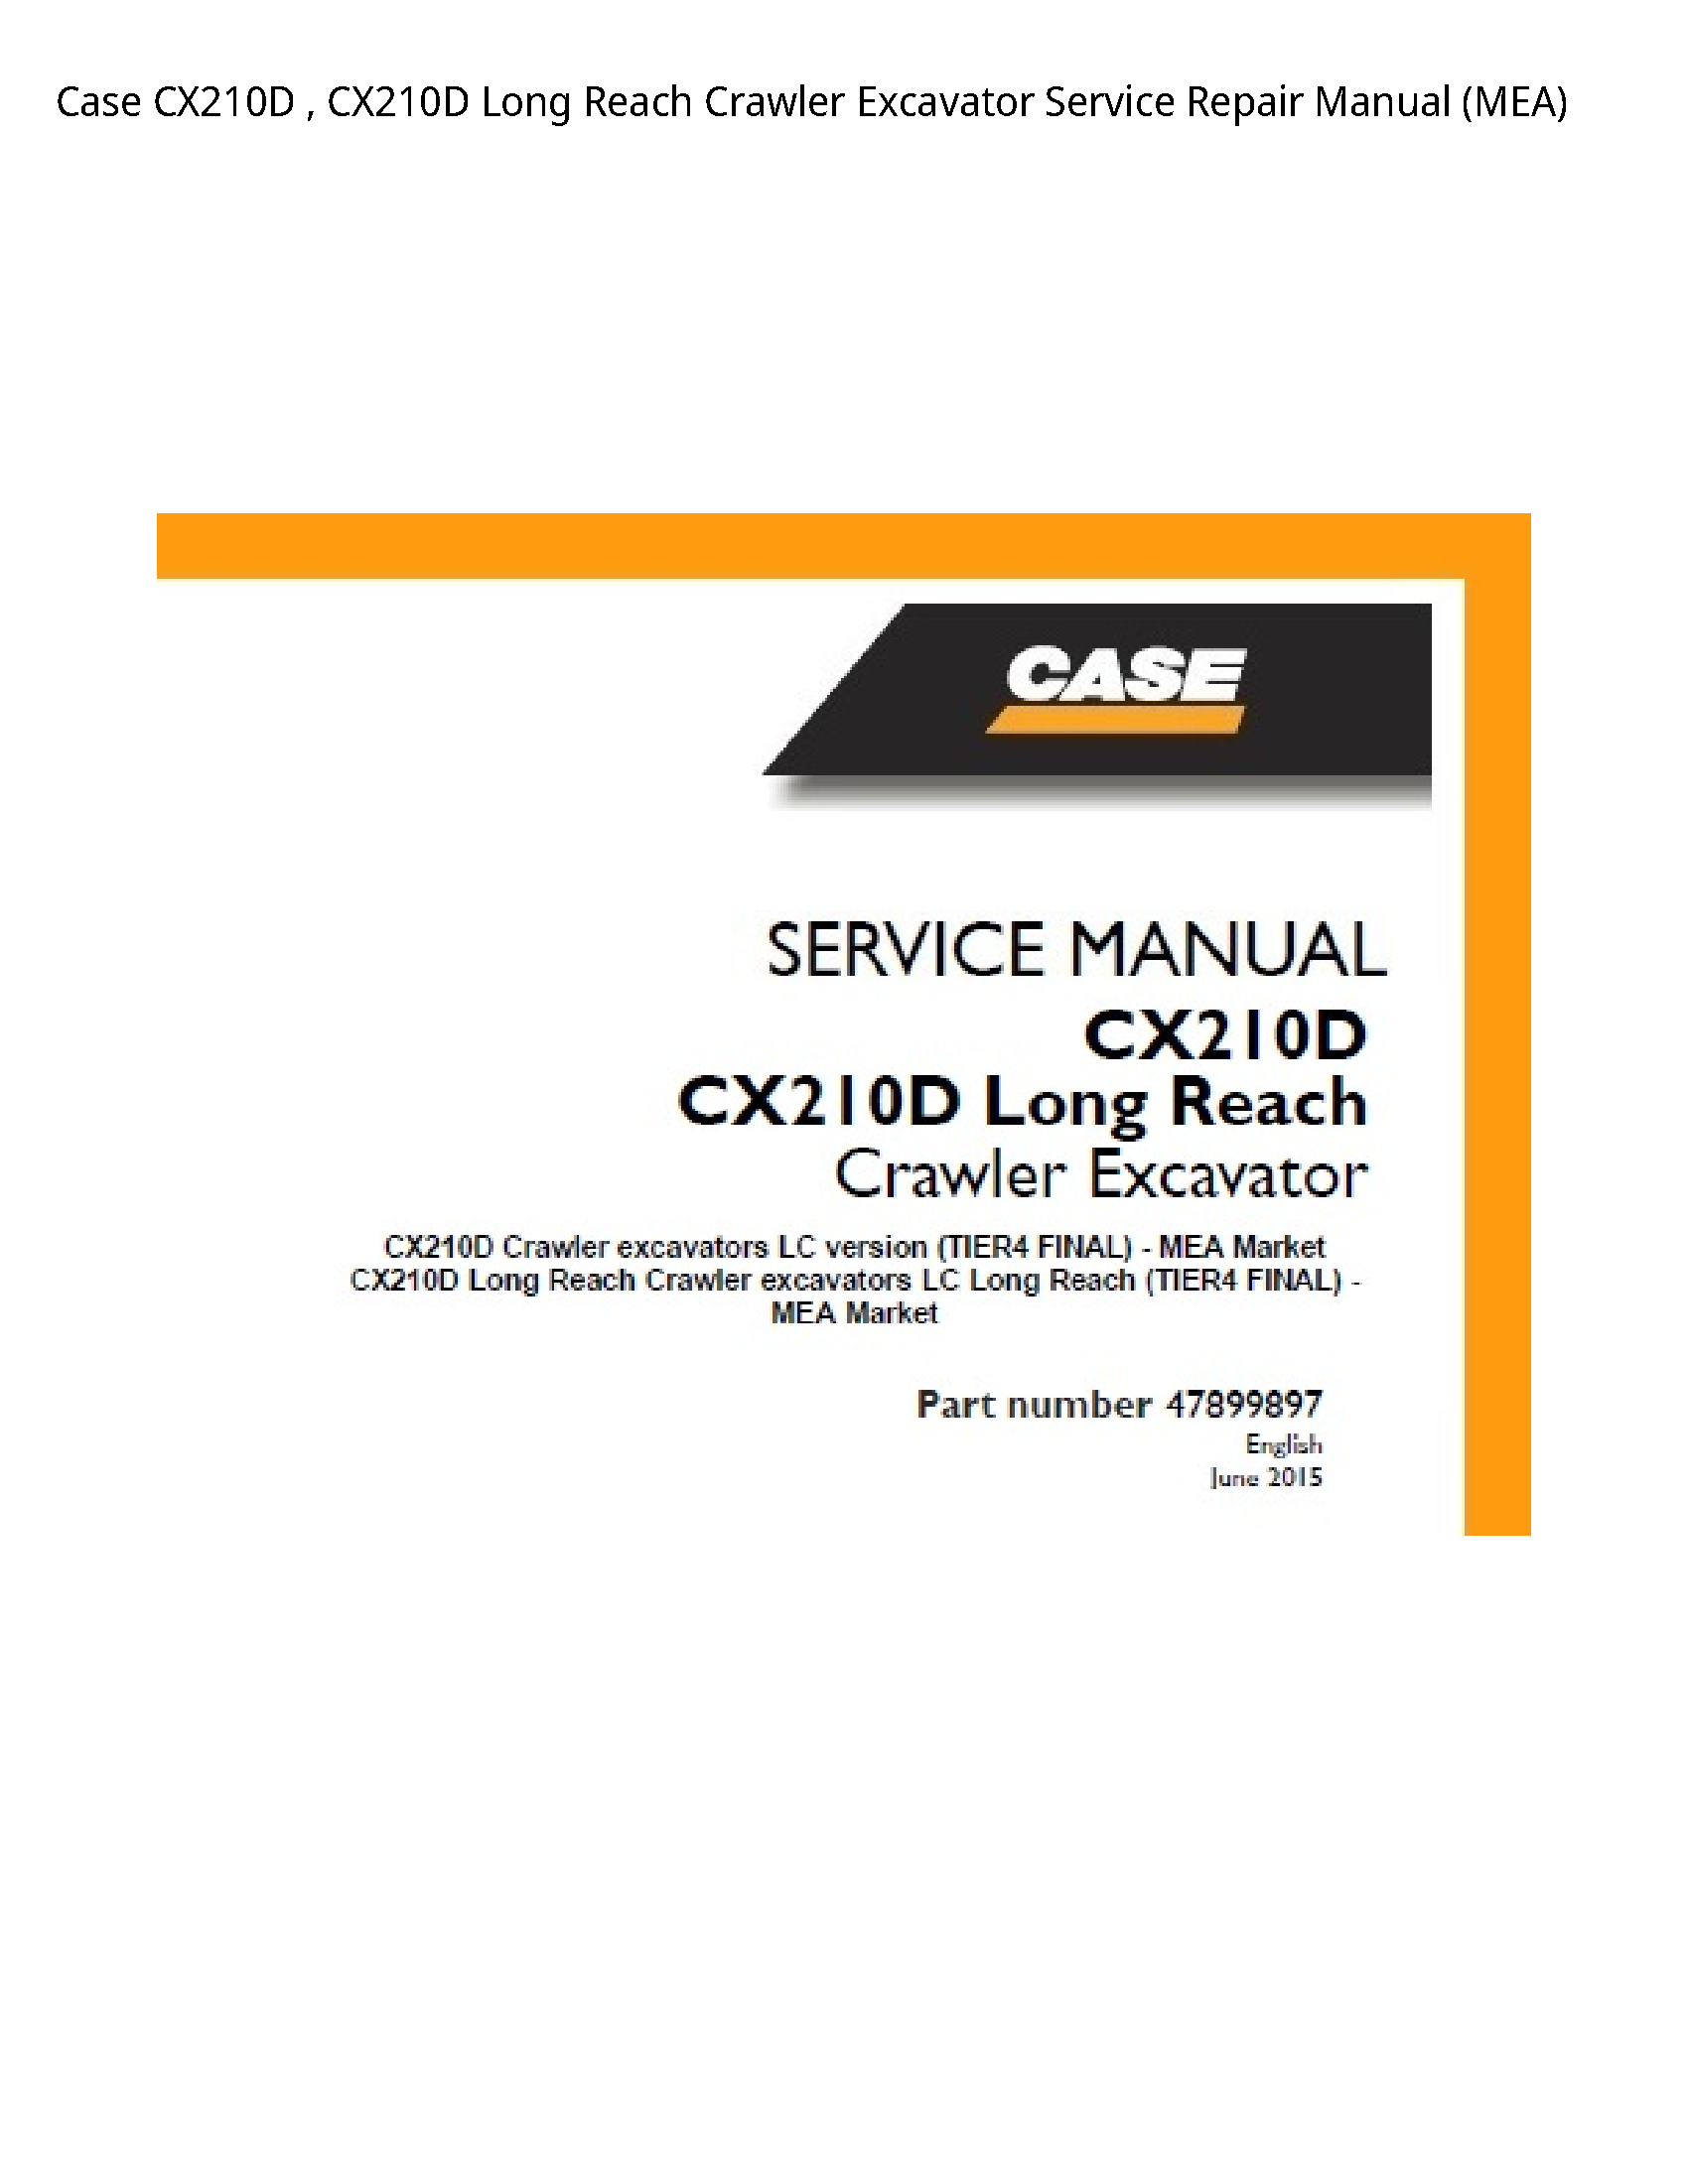 Case/Case IH CX210D Long Reach Crawler Excavator manual